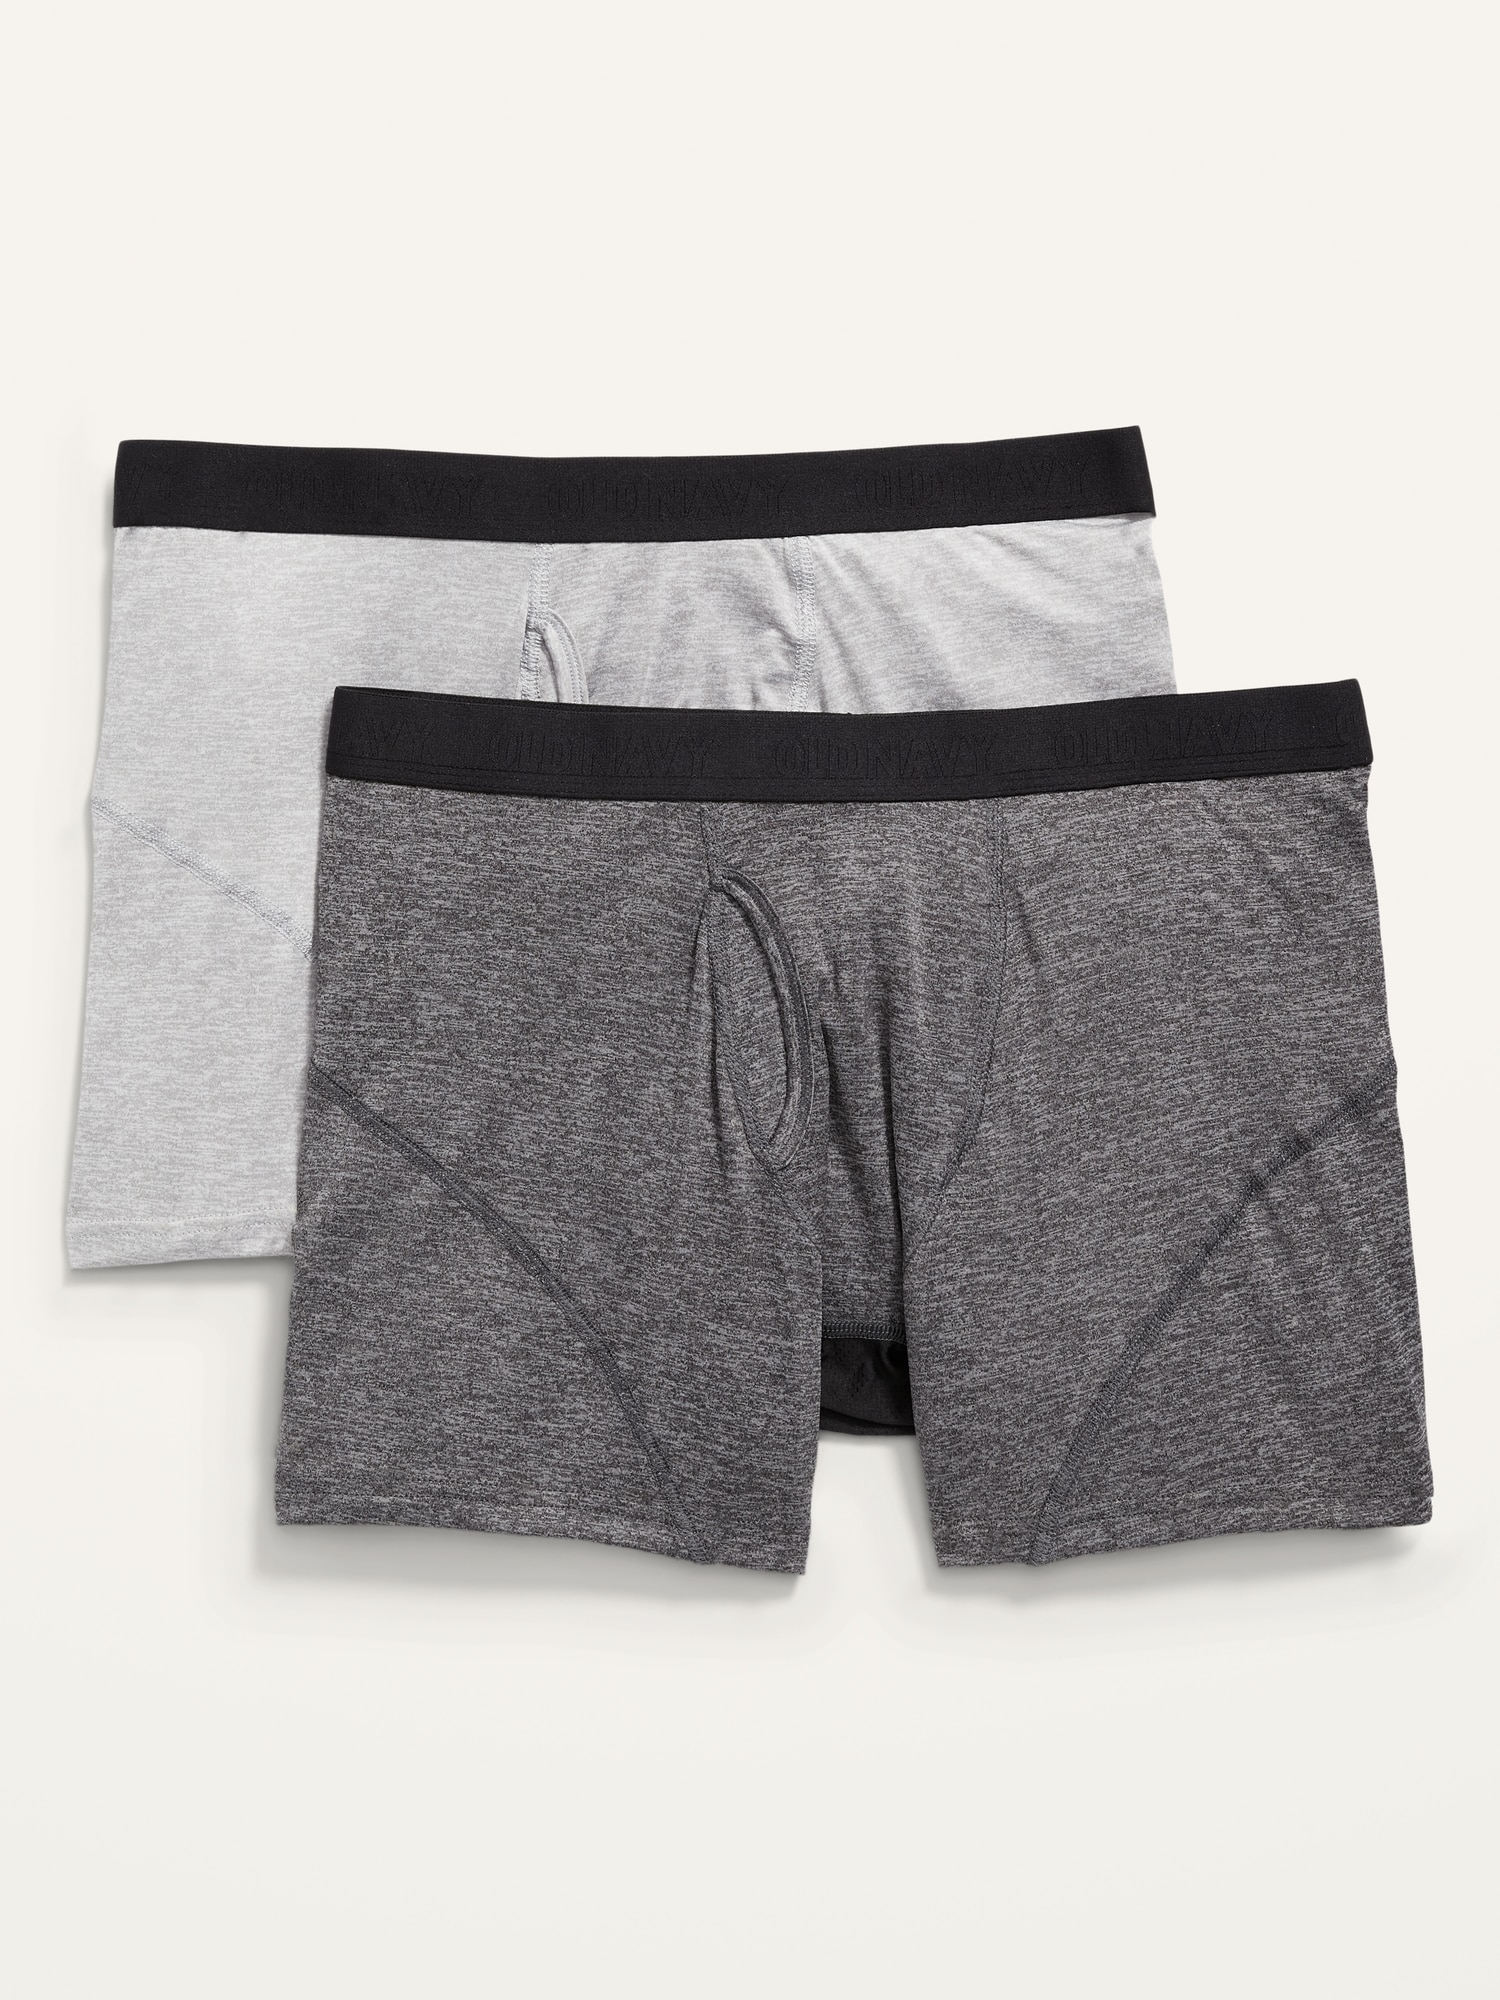 Go-Dry Cool Tech Boxer-Briefs Underwear 2-Pack for Men -- 5-inch inseam ...